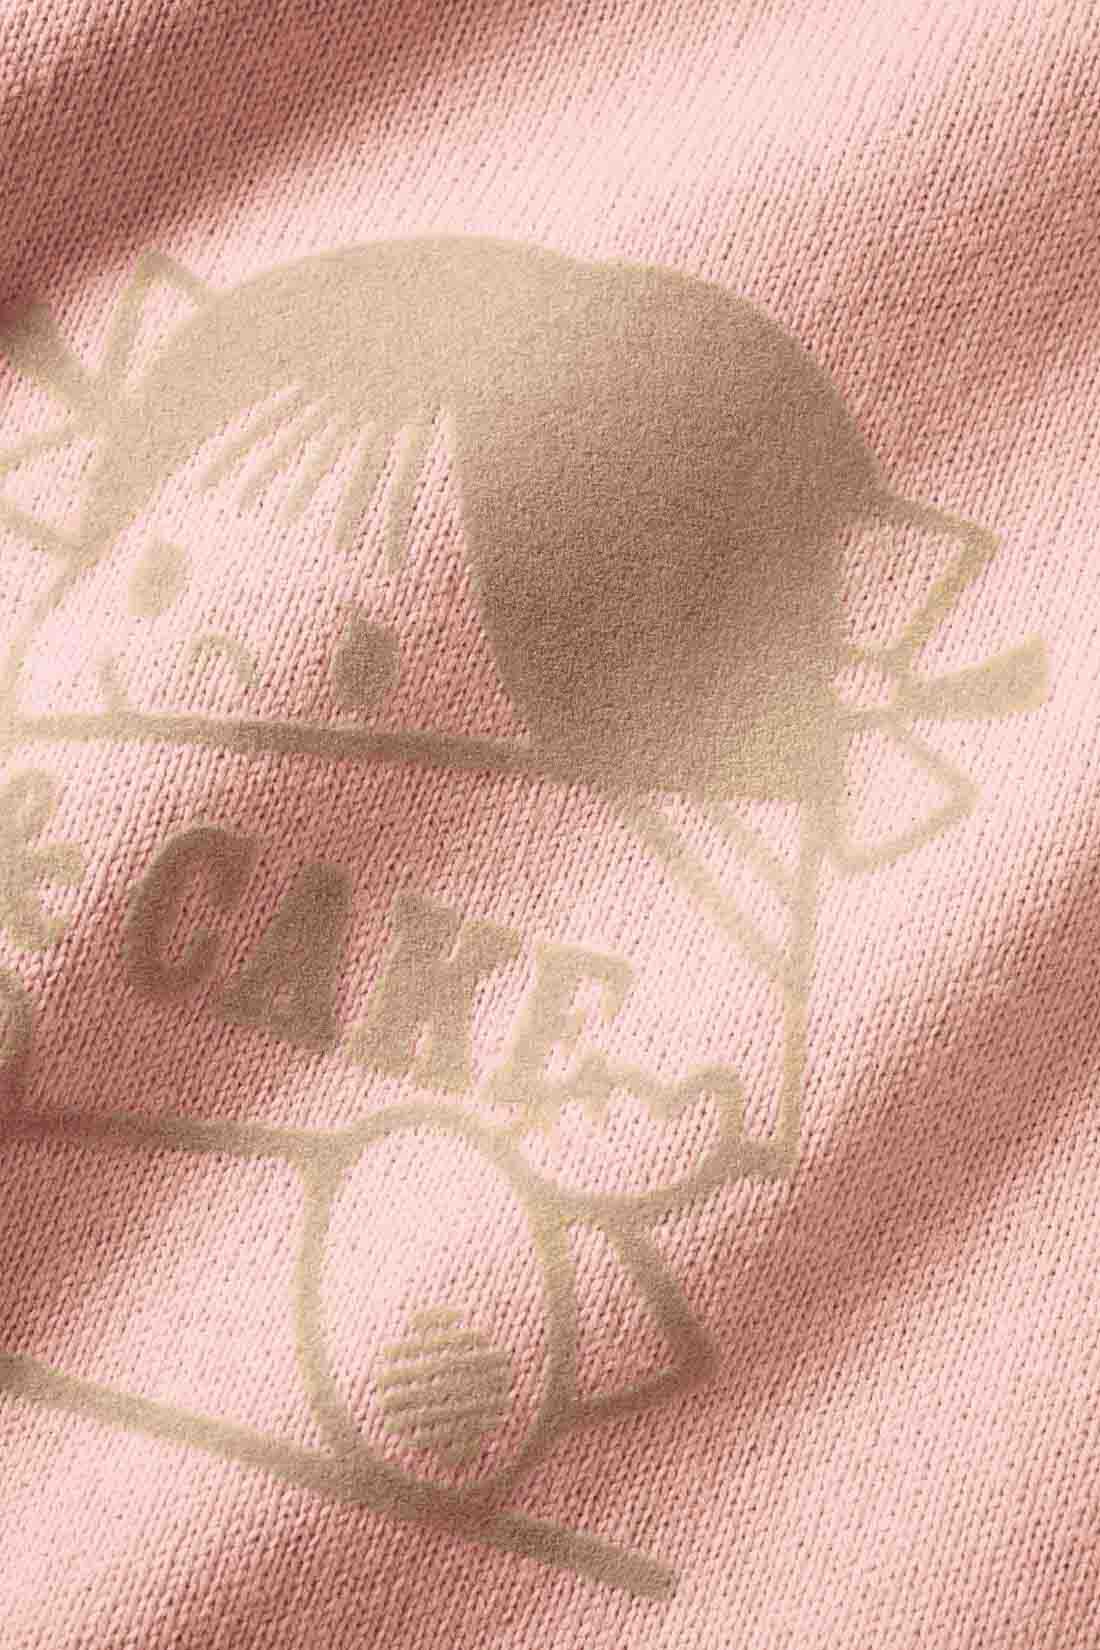 Live in  comfort|Live love cottonプロジェクト リブ イン コンフォート神戸のベーカリーハラダのパンさんとつくったオーガニックコットンのレトロかわいいTシャツ〈ジェイブルー〉|空紡糸を使用した厚みのある生地はオーガニックコットン100％！ フロントのフロッキープリントがおしゃれ。※お届けするカラーとは異なります。